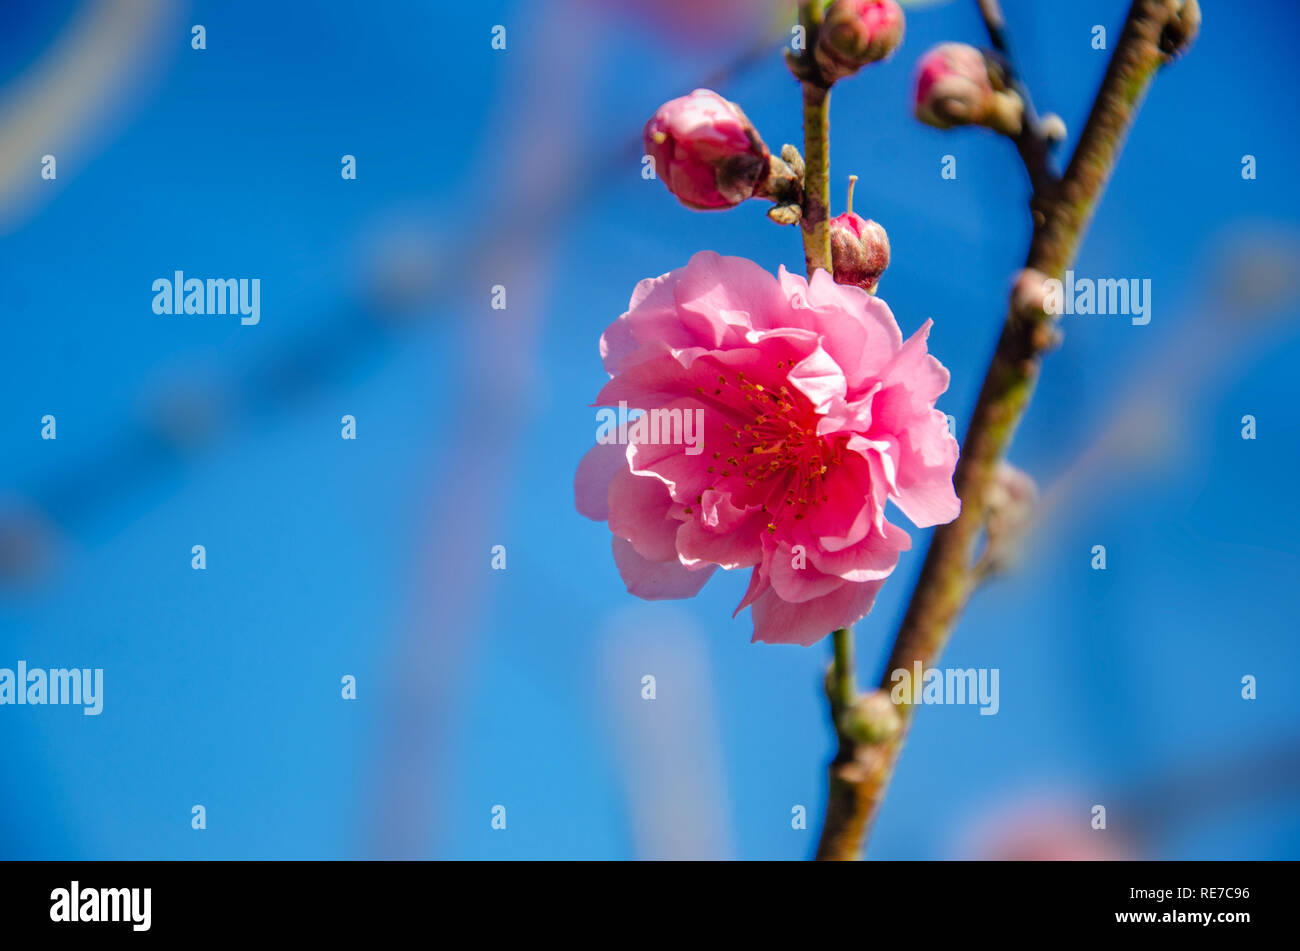 Prugna fiore rosa fioritura sfondo blu Foto Stock